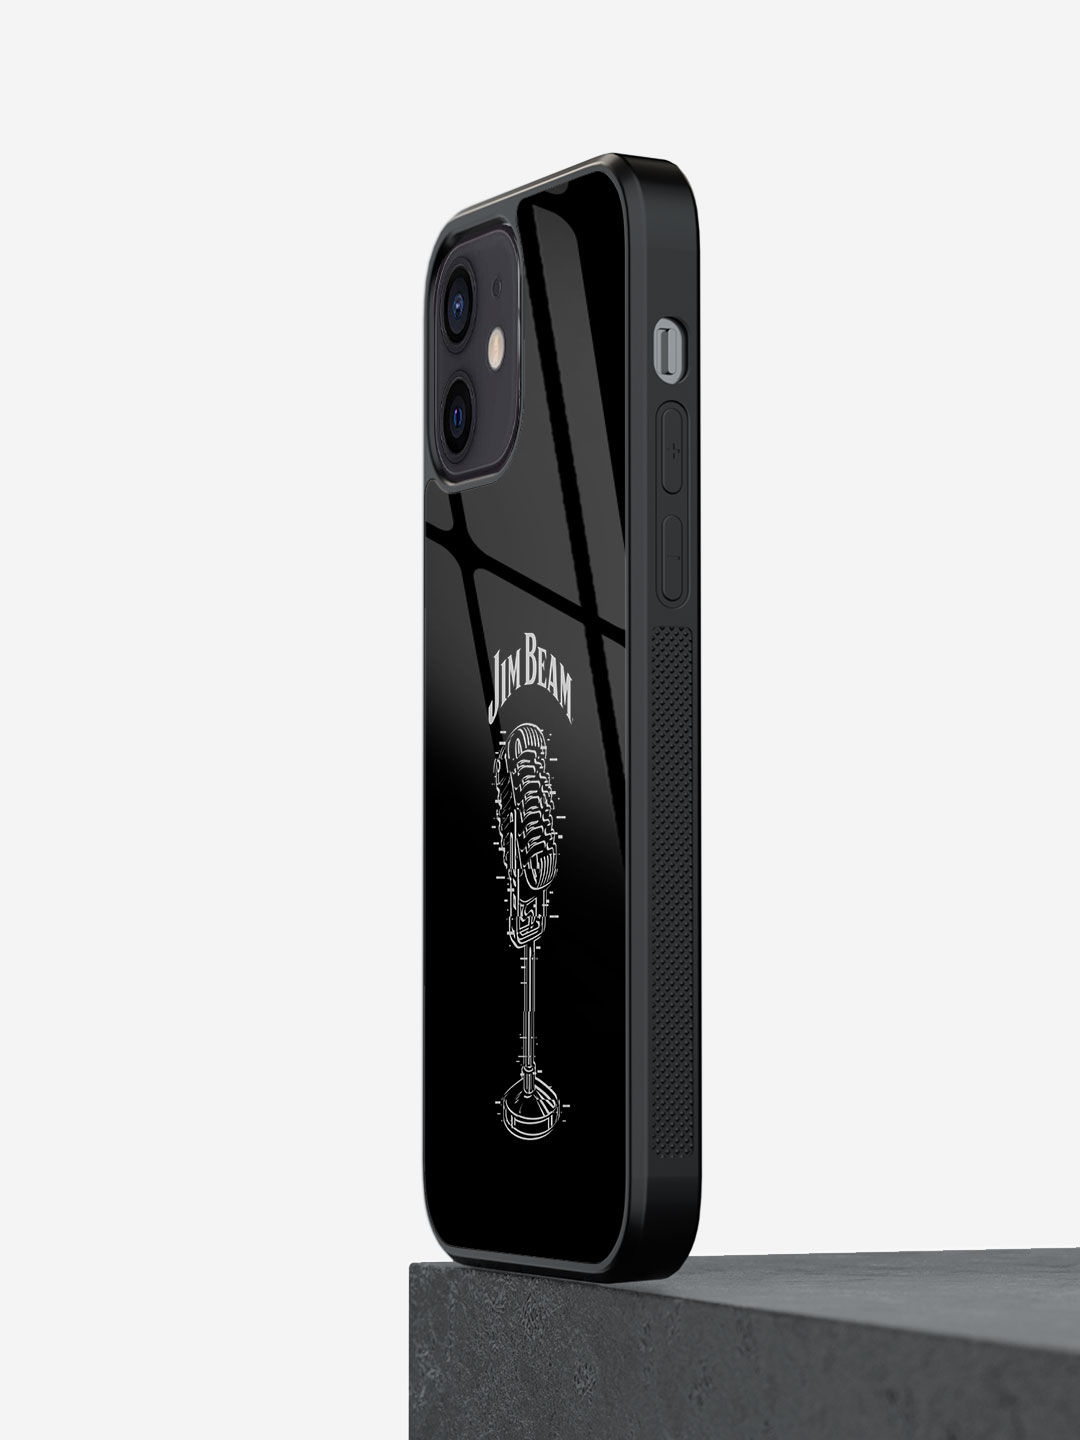 Jim Beam Retro Mic - Glass Case For iPhone 12 Mini